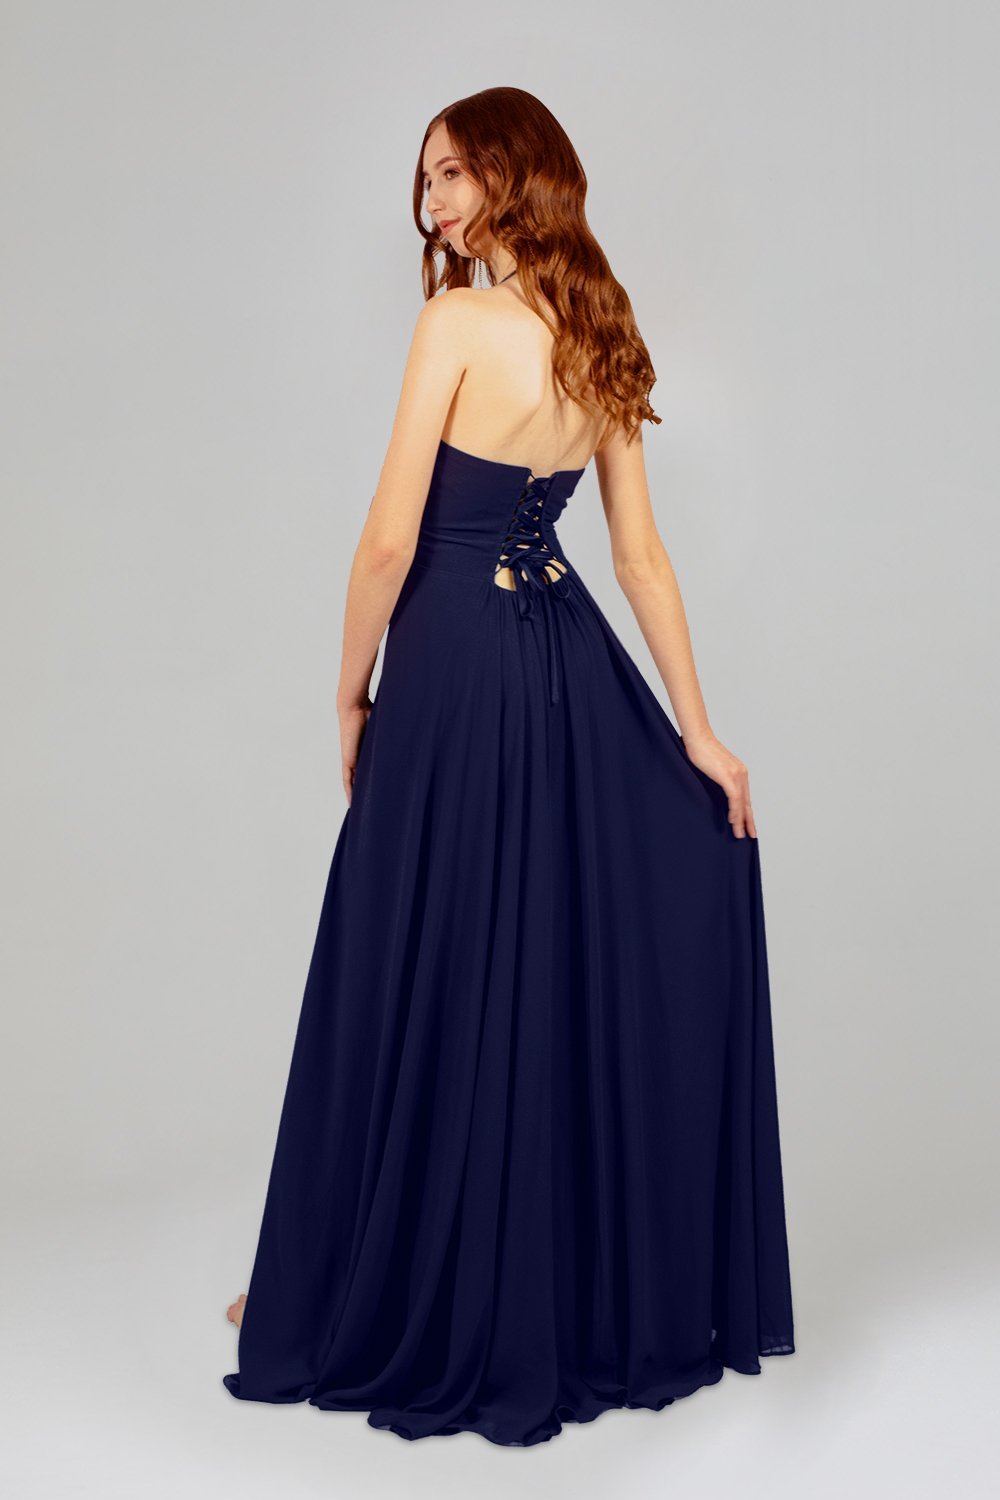 chiffon long bridesmaid dresses navy blue perth australia envious bridal & formal